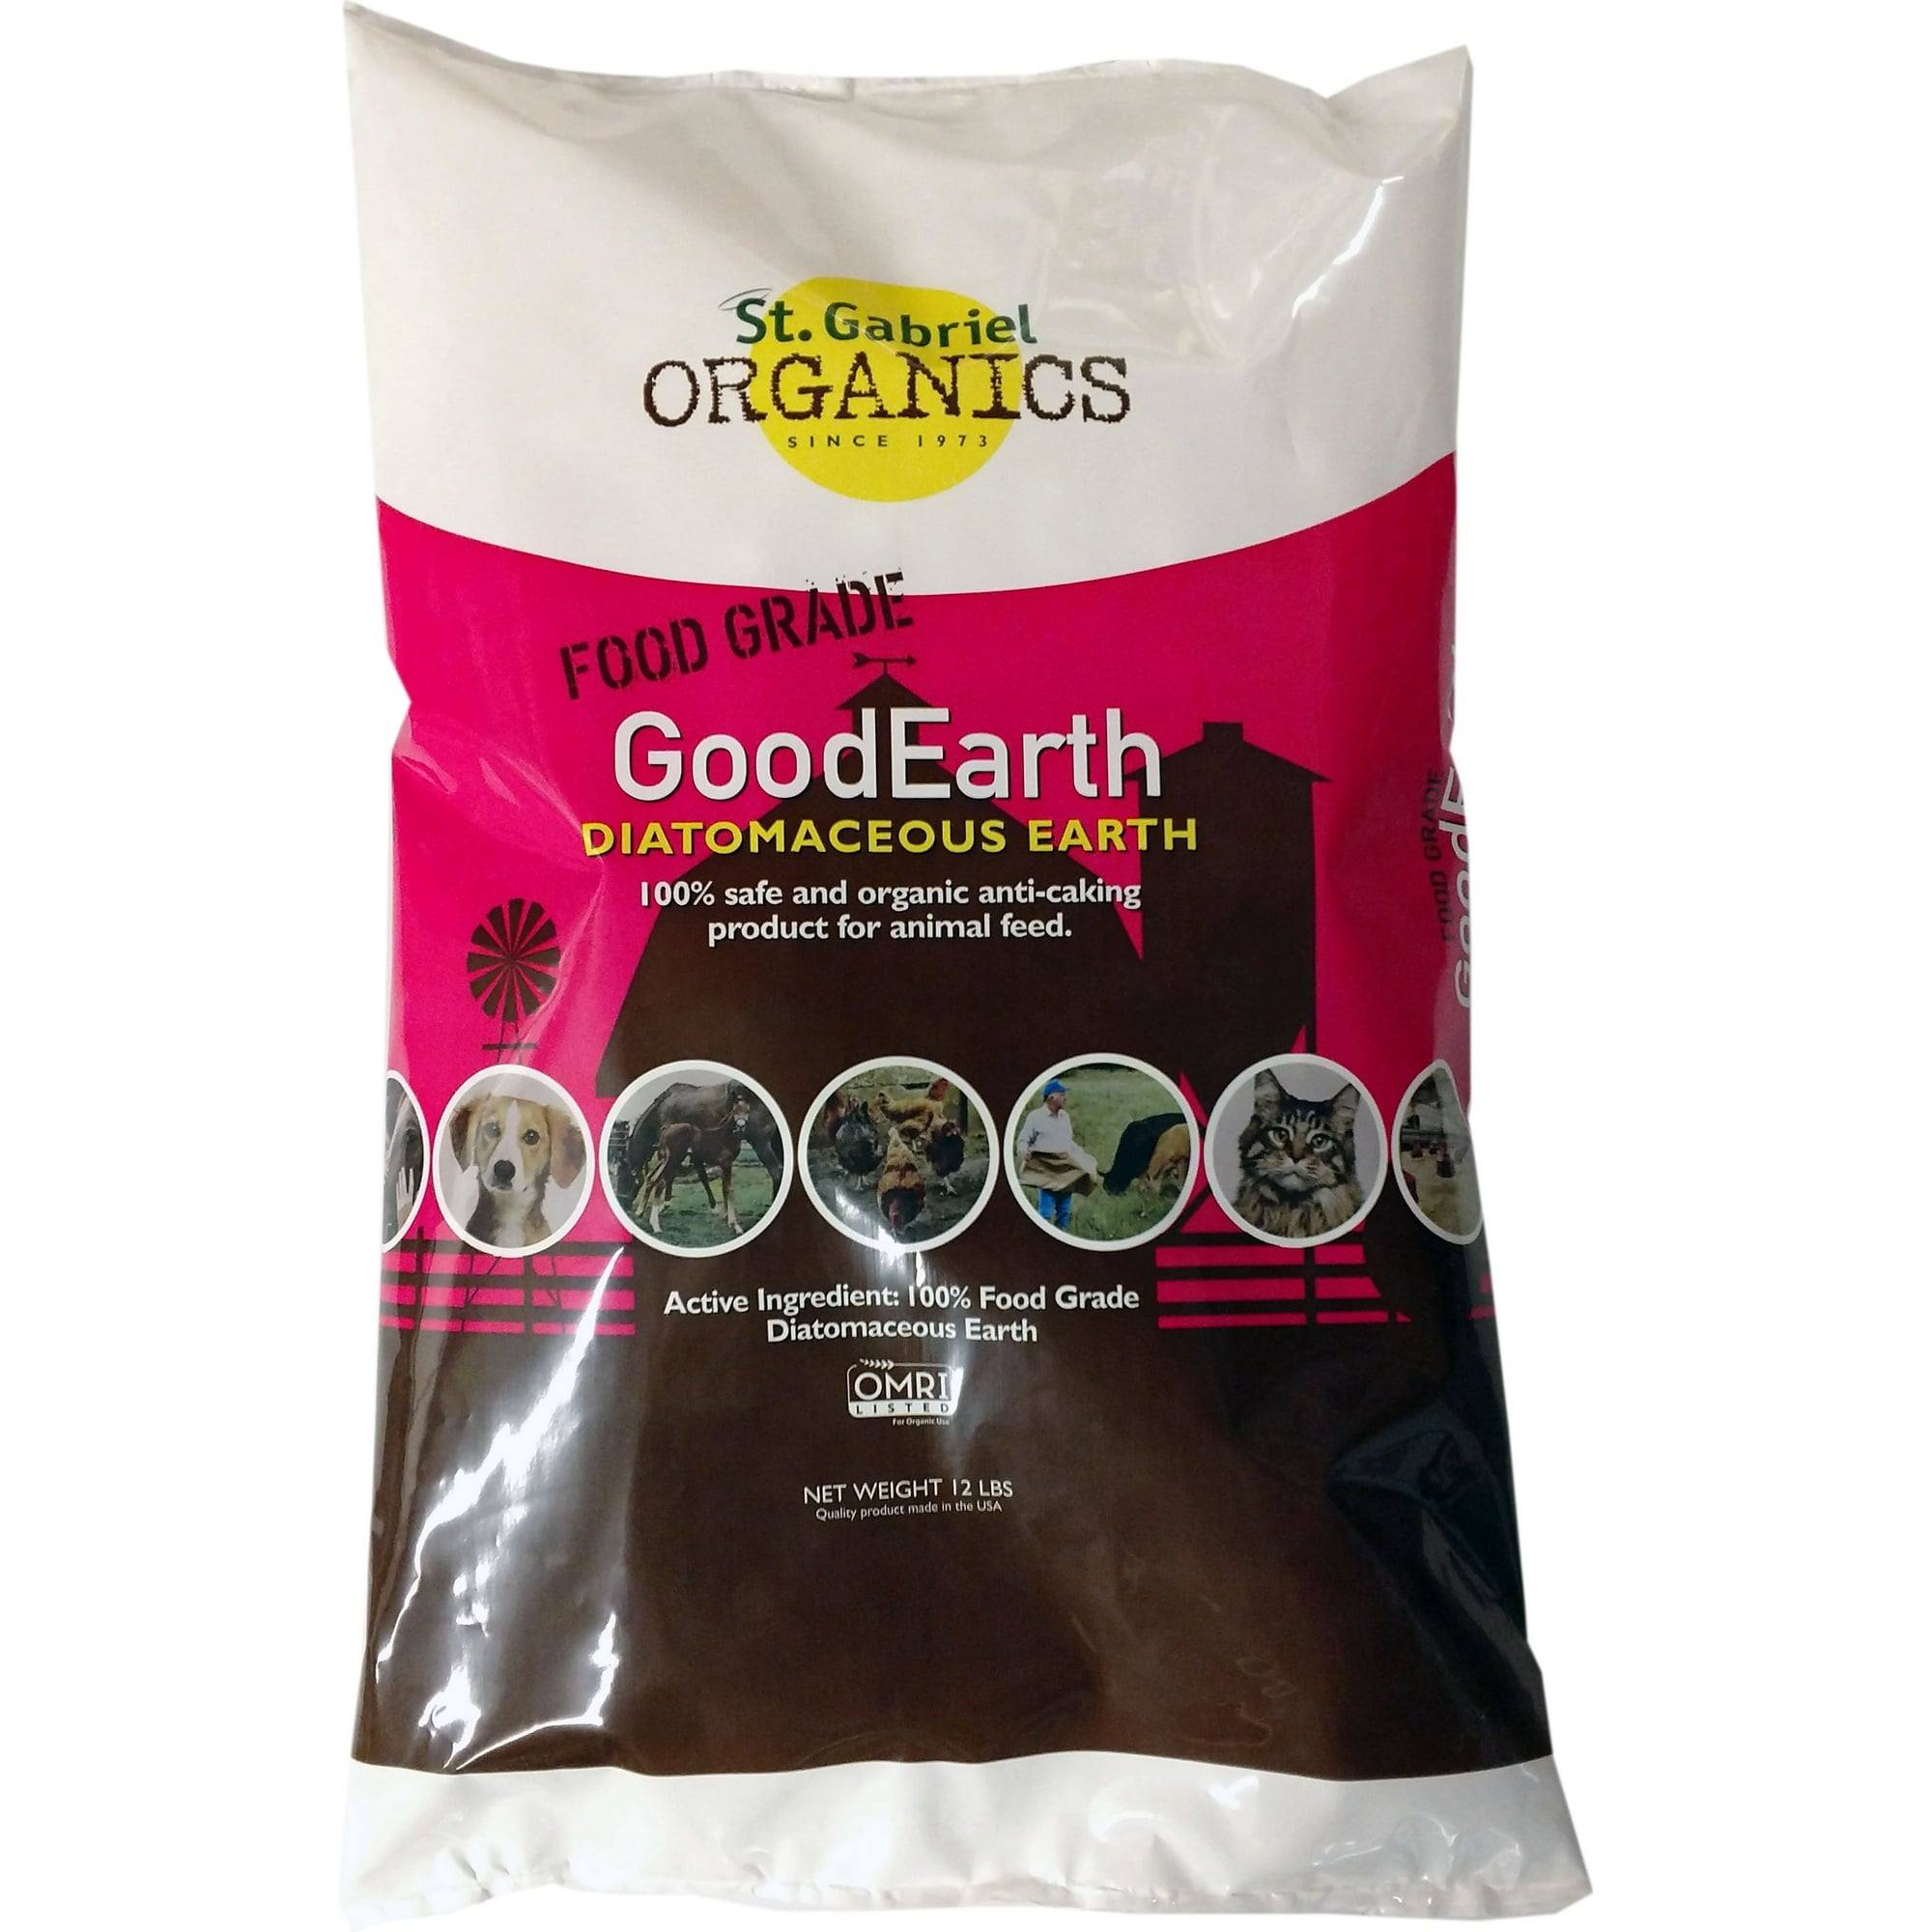 St. Gabriel Organics Food Grade GoodEarth Diatomaceous Earth Anti-caking Agent, 12 lbs